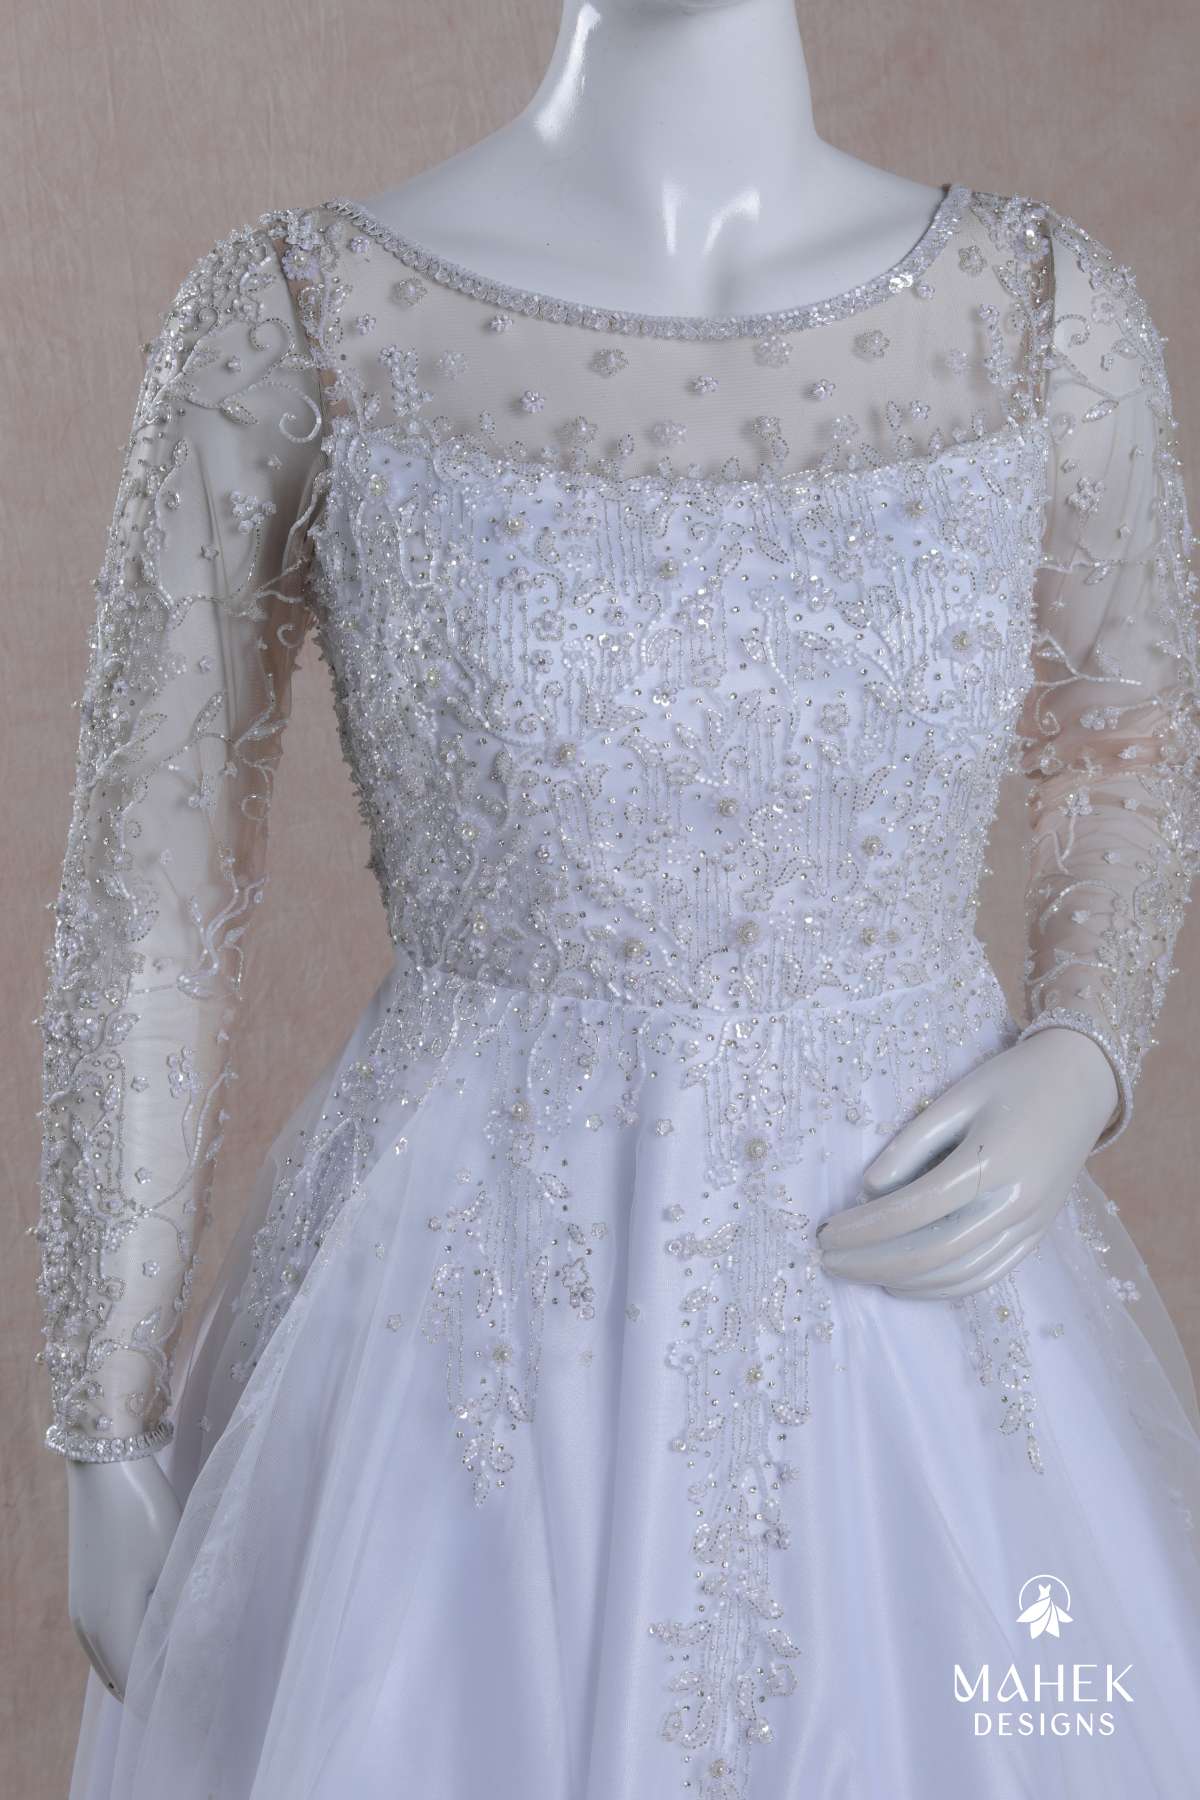 White Color Ball Gown Dresses | White Ballroom Dresses - June Bridals